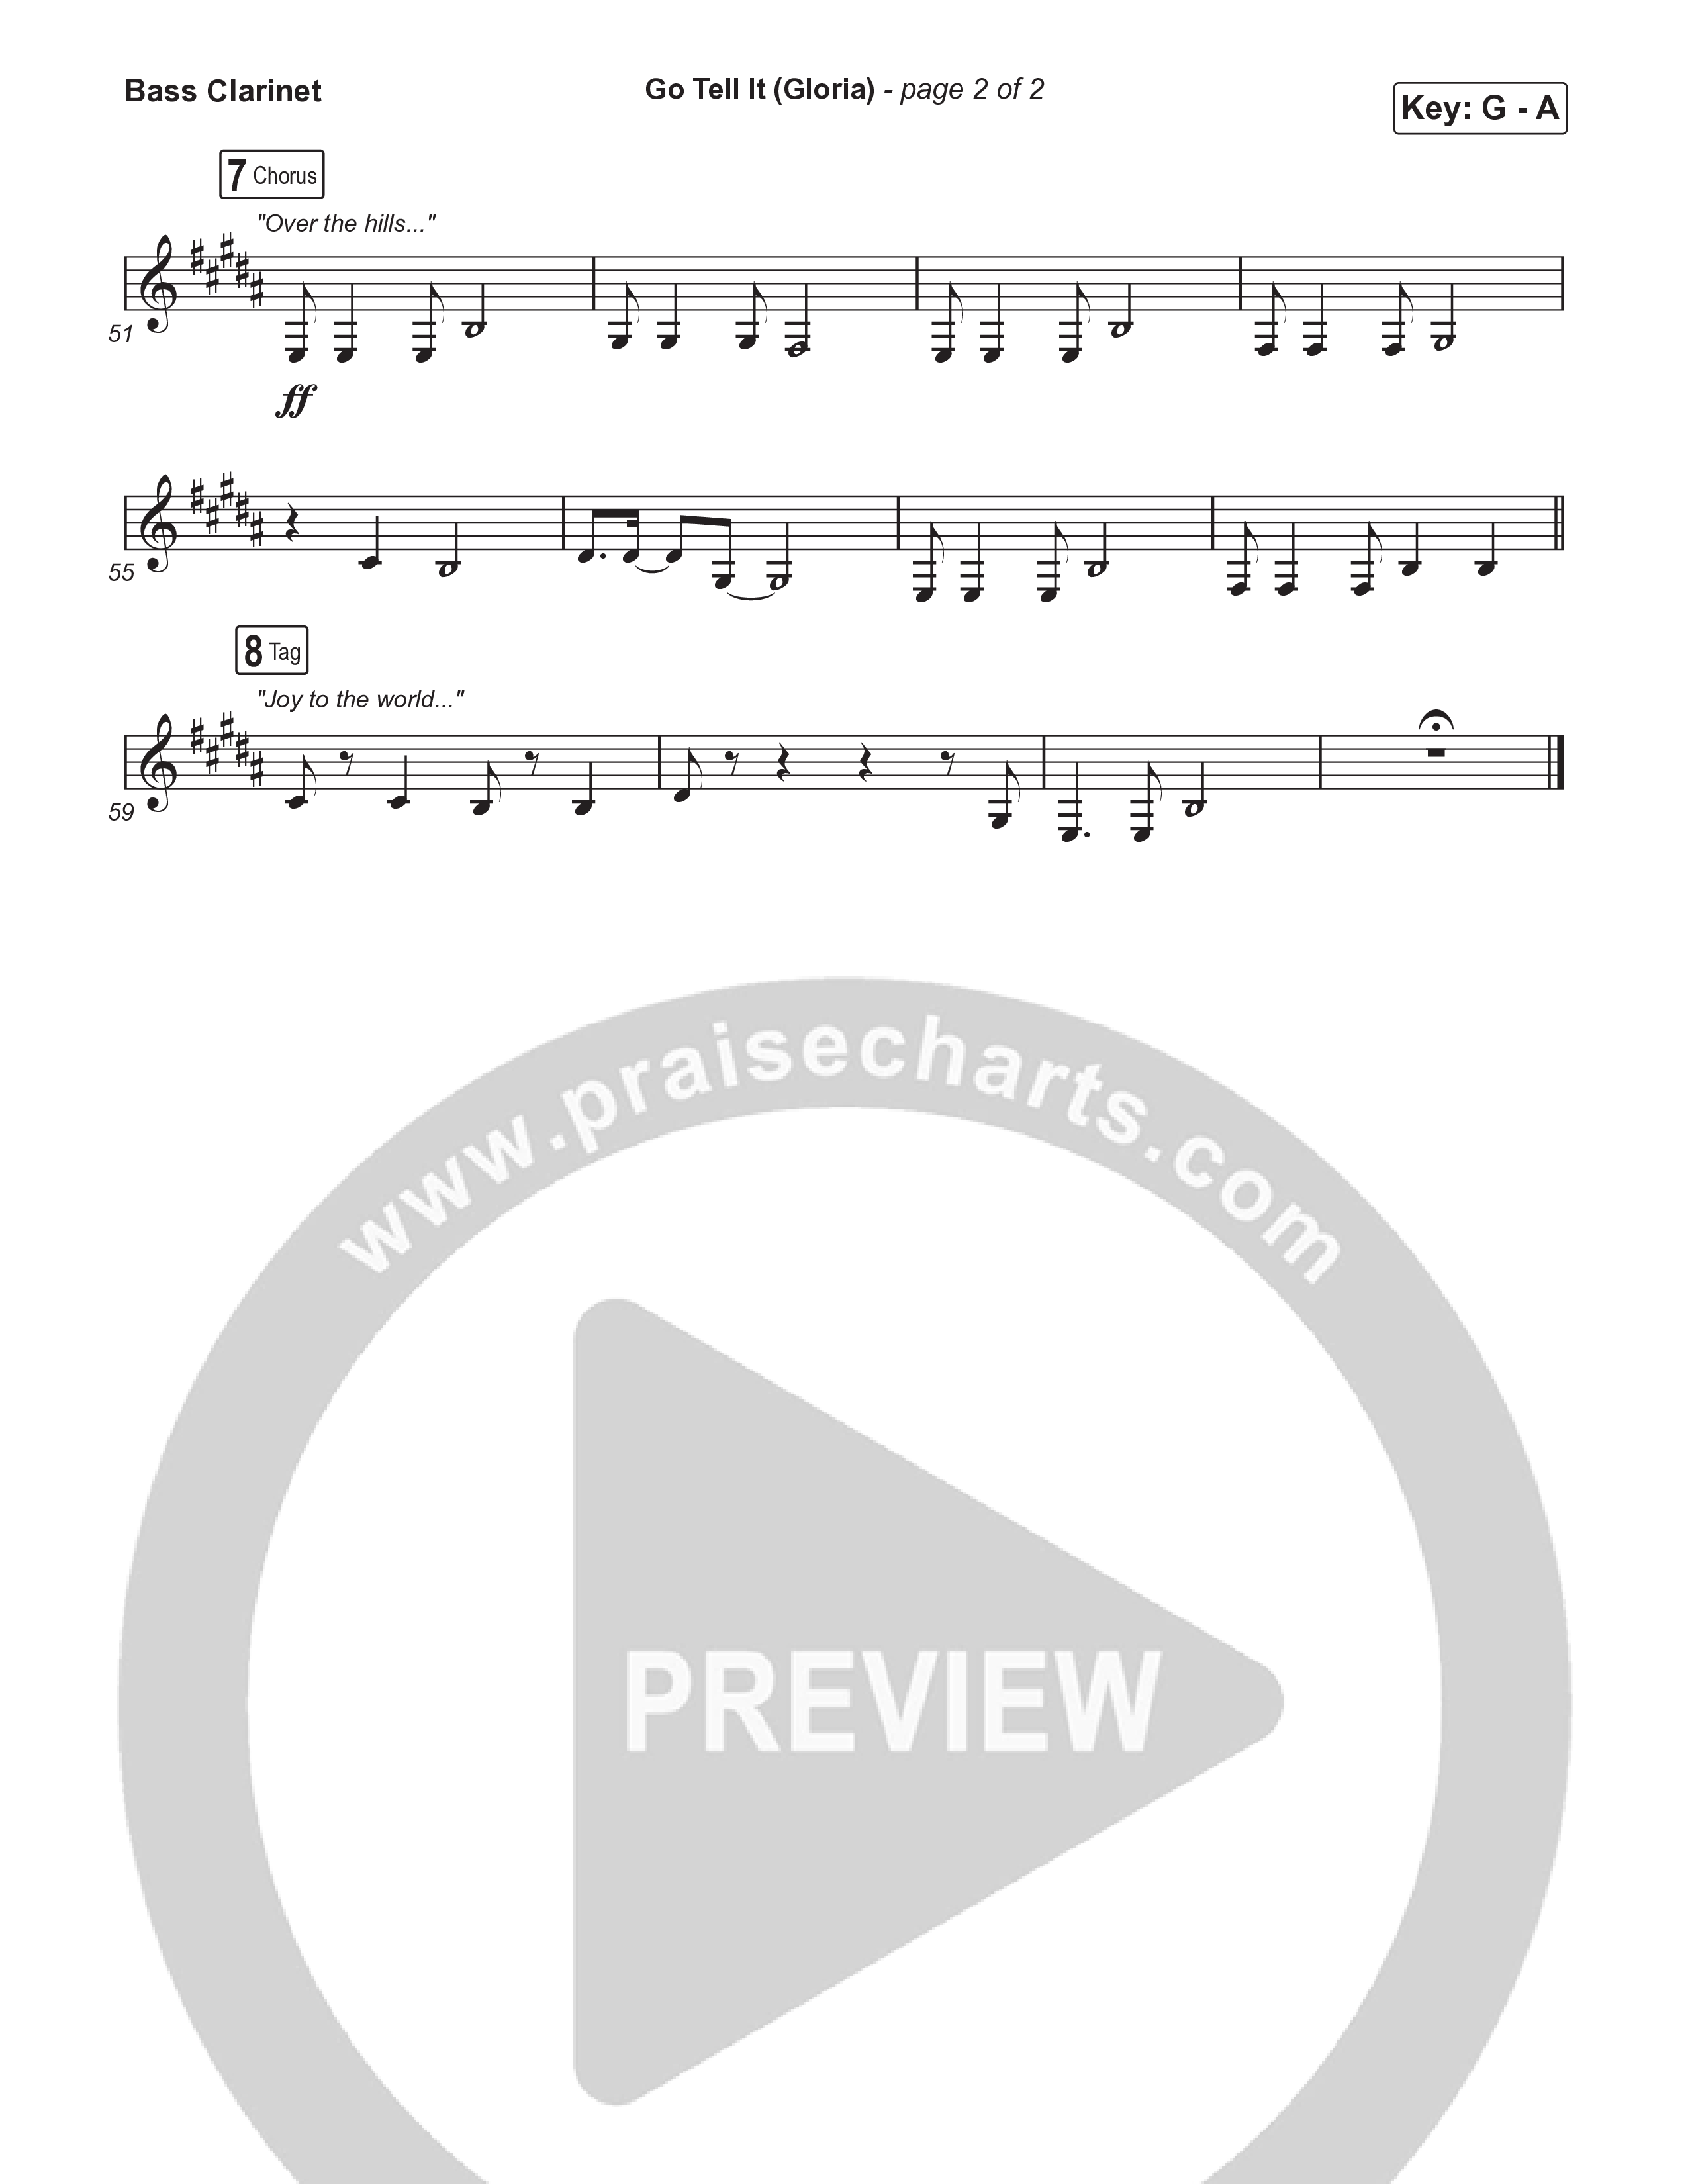 Go Tell It (Gloria) (Choral Anthem SATB) Bass Clarinet (Matt Maher / Arr. Luke Gambill)